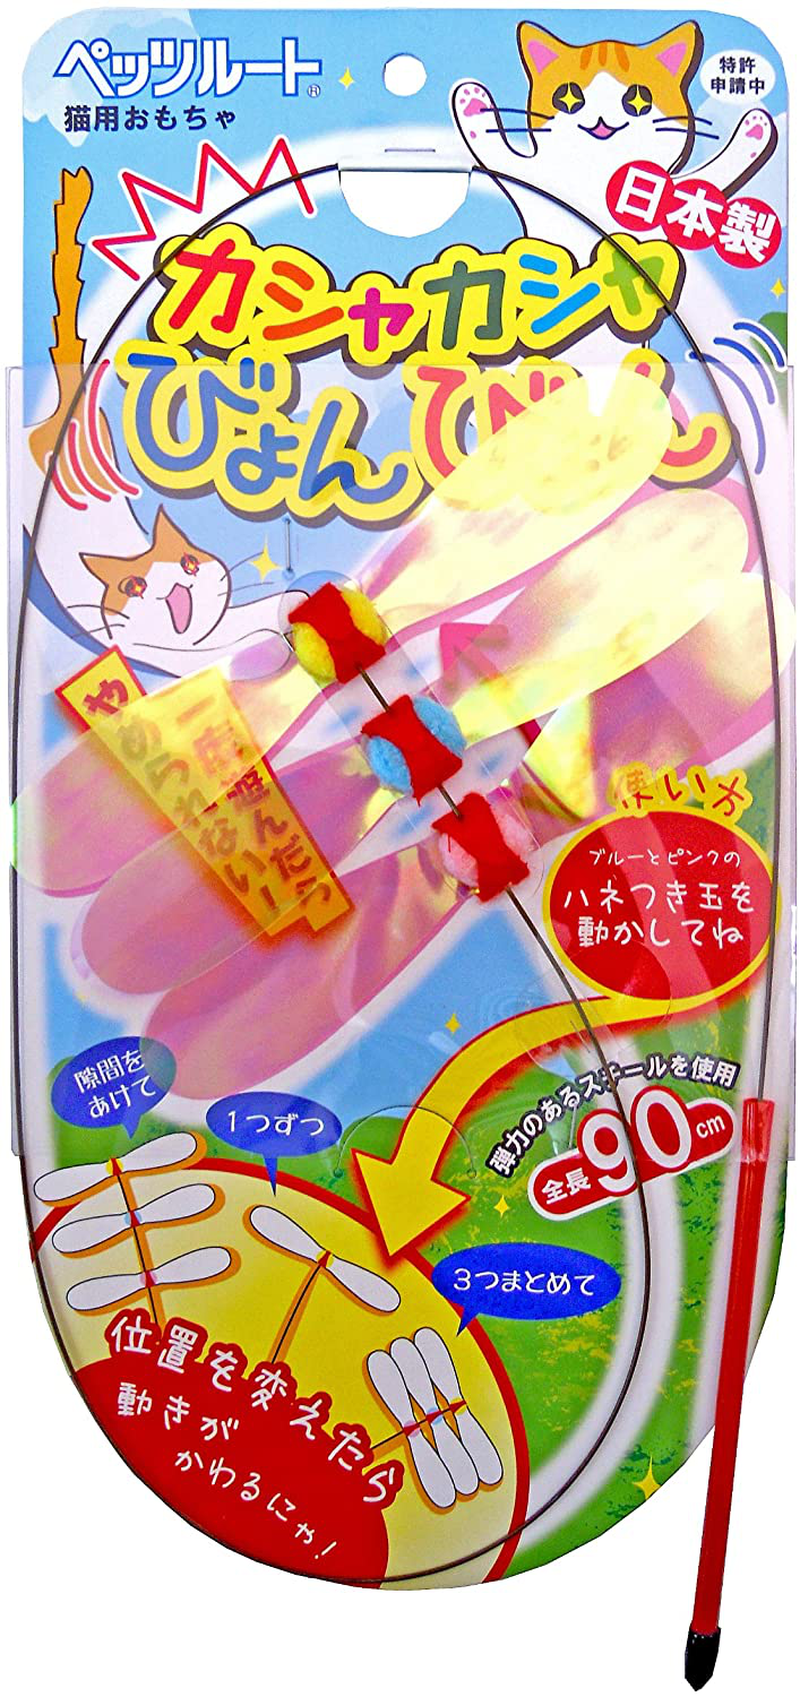 Petz Route Long Stick Play with a Kitten Made in Japan Animals & Pet Supplies > Pet Supplies > Cat Supplies > Cat Toys ペッツルート (Petz Route)   